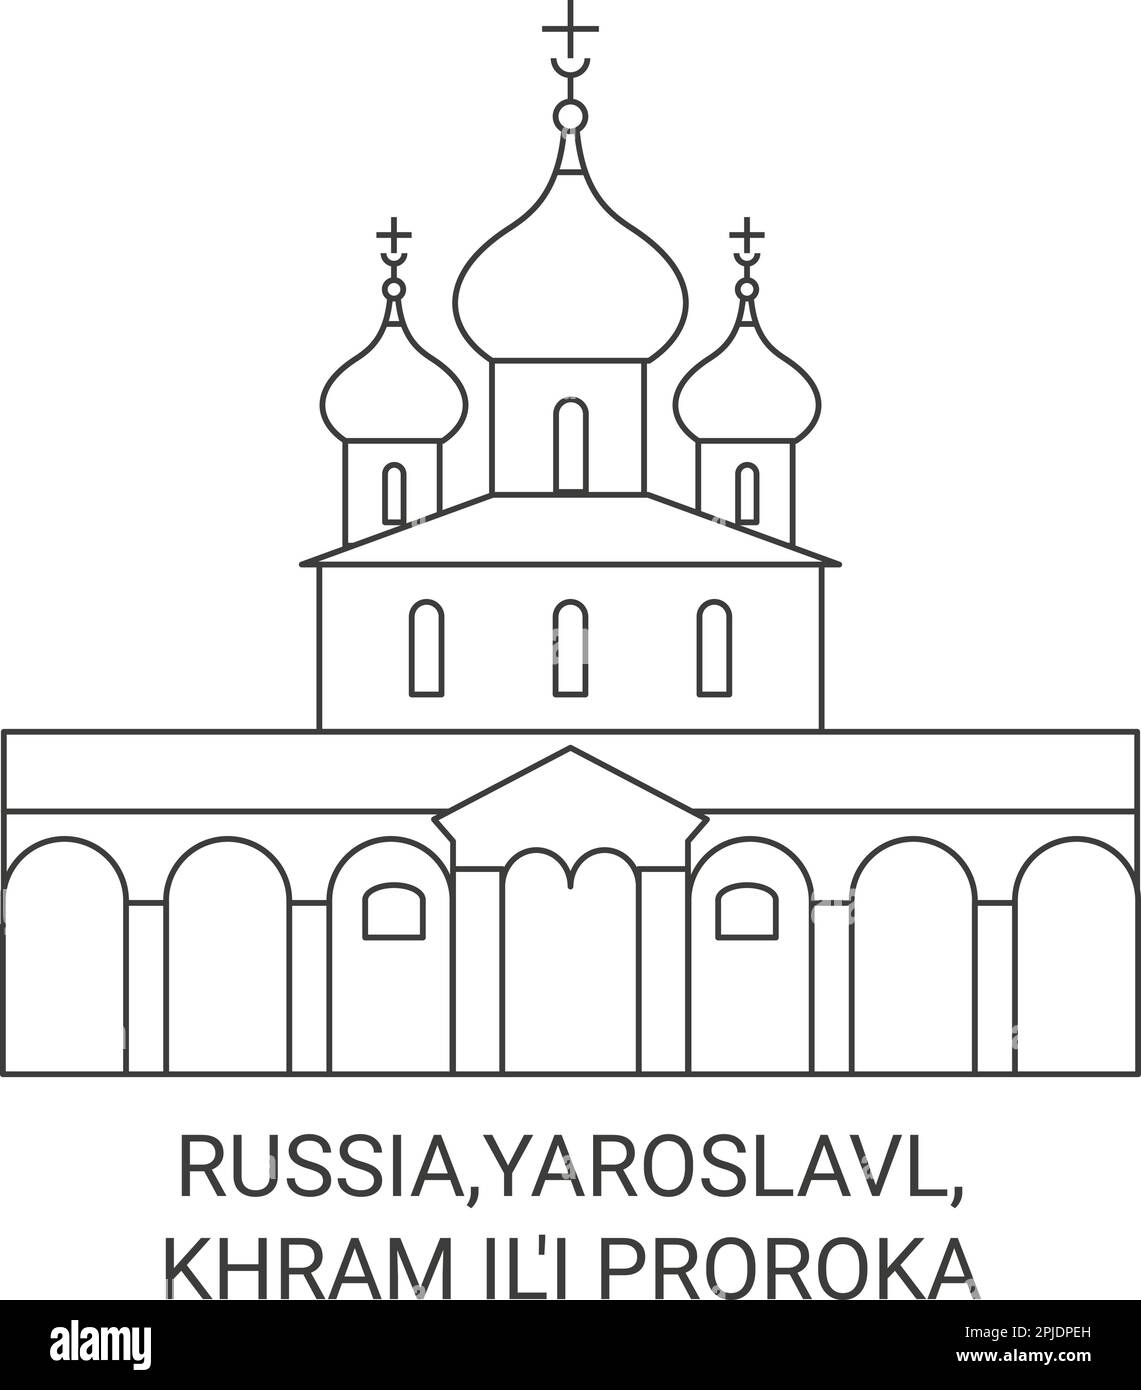 Russia,Yaroslavl, Khram Il'i Proroka travel landmark vector illustration Stock Vector